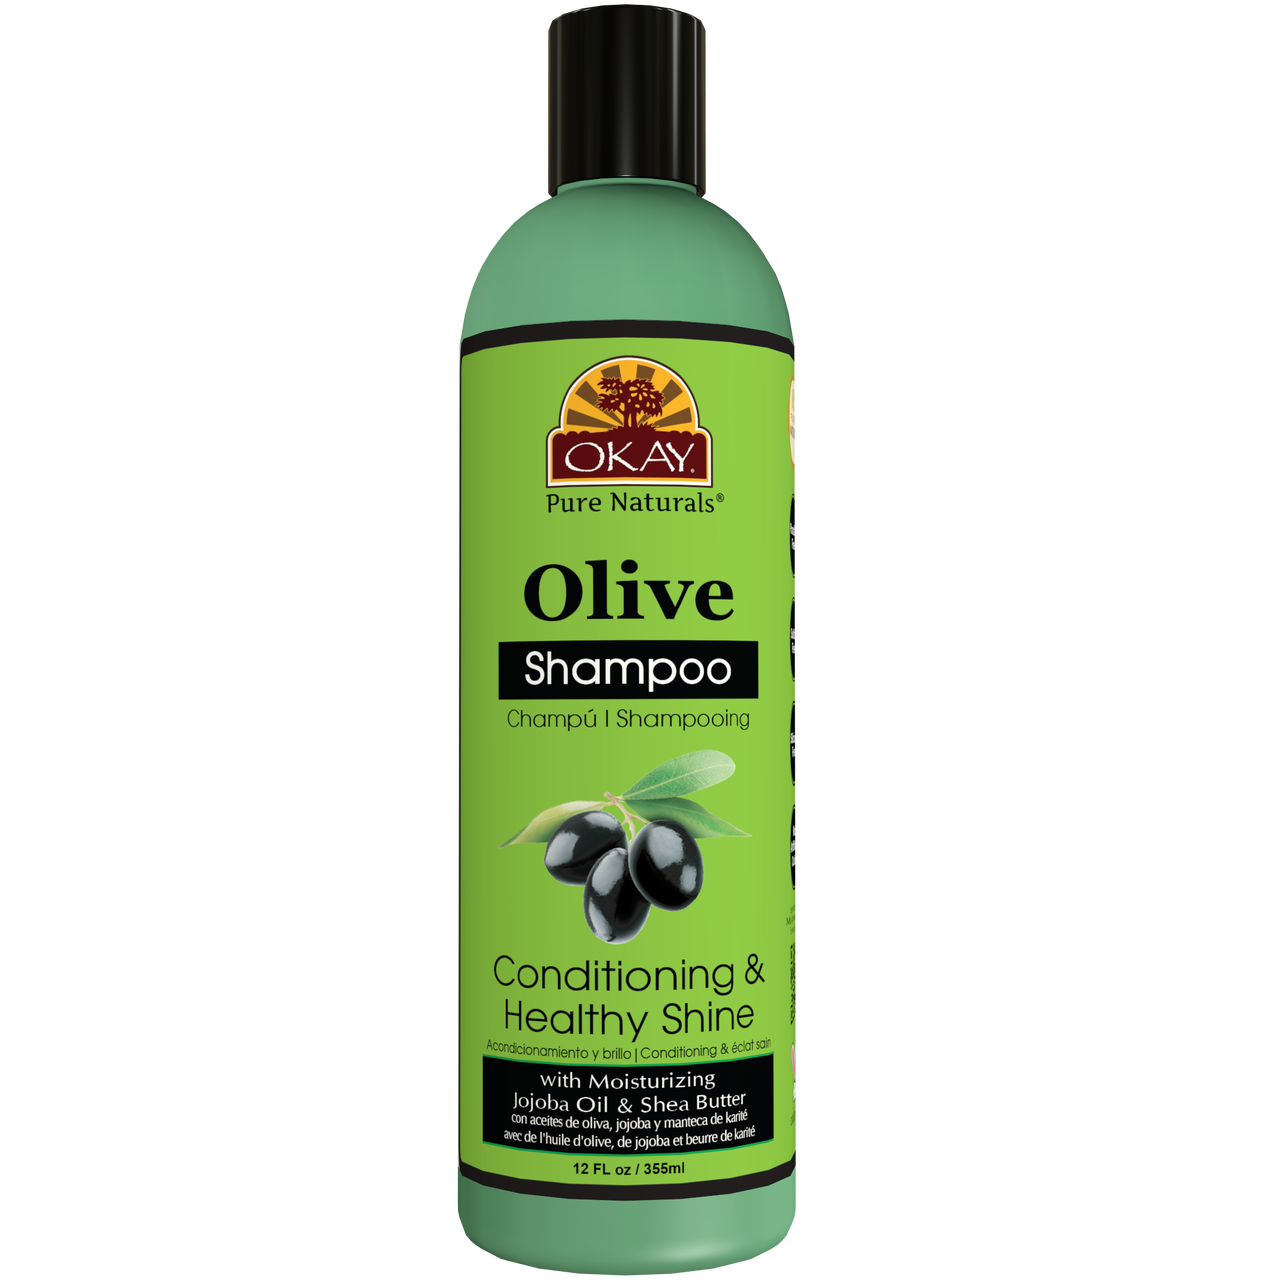  Okay Olive Shampoo